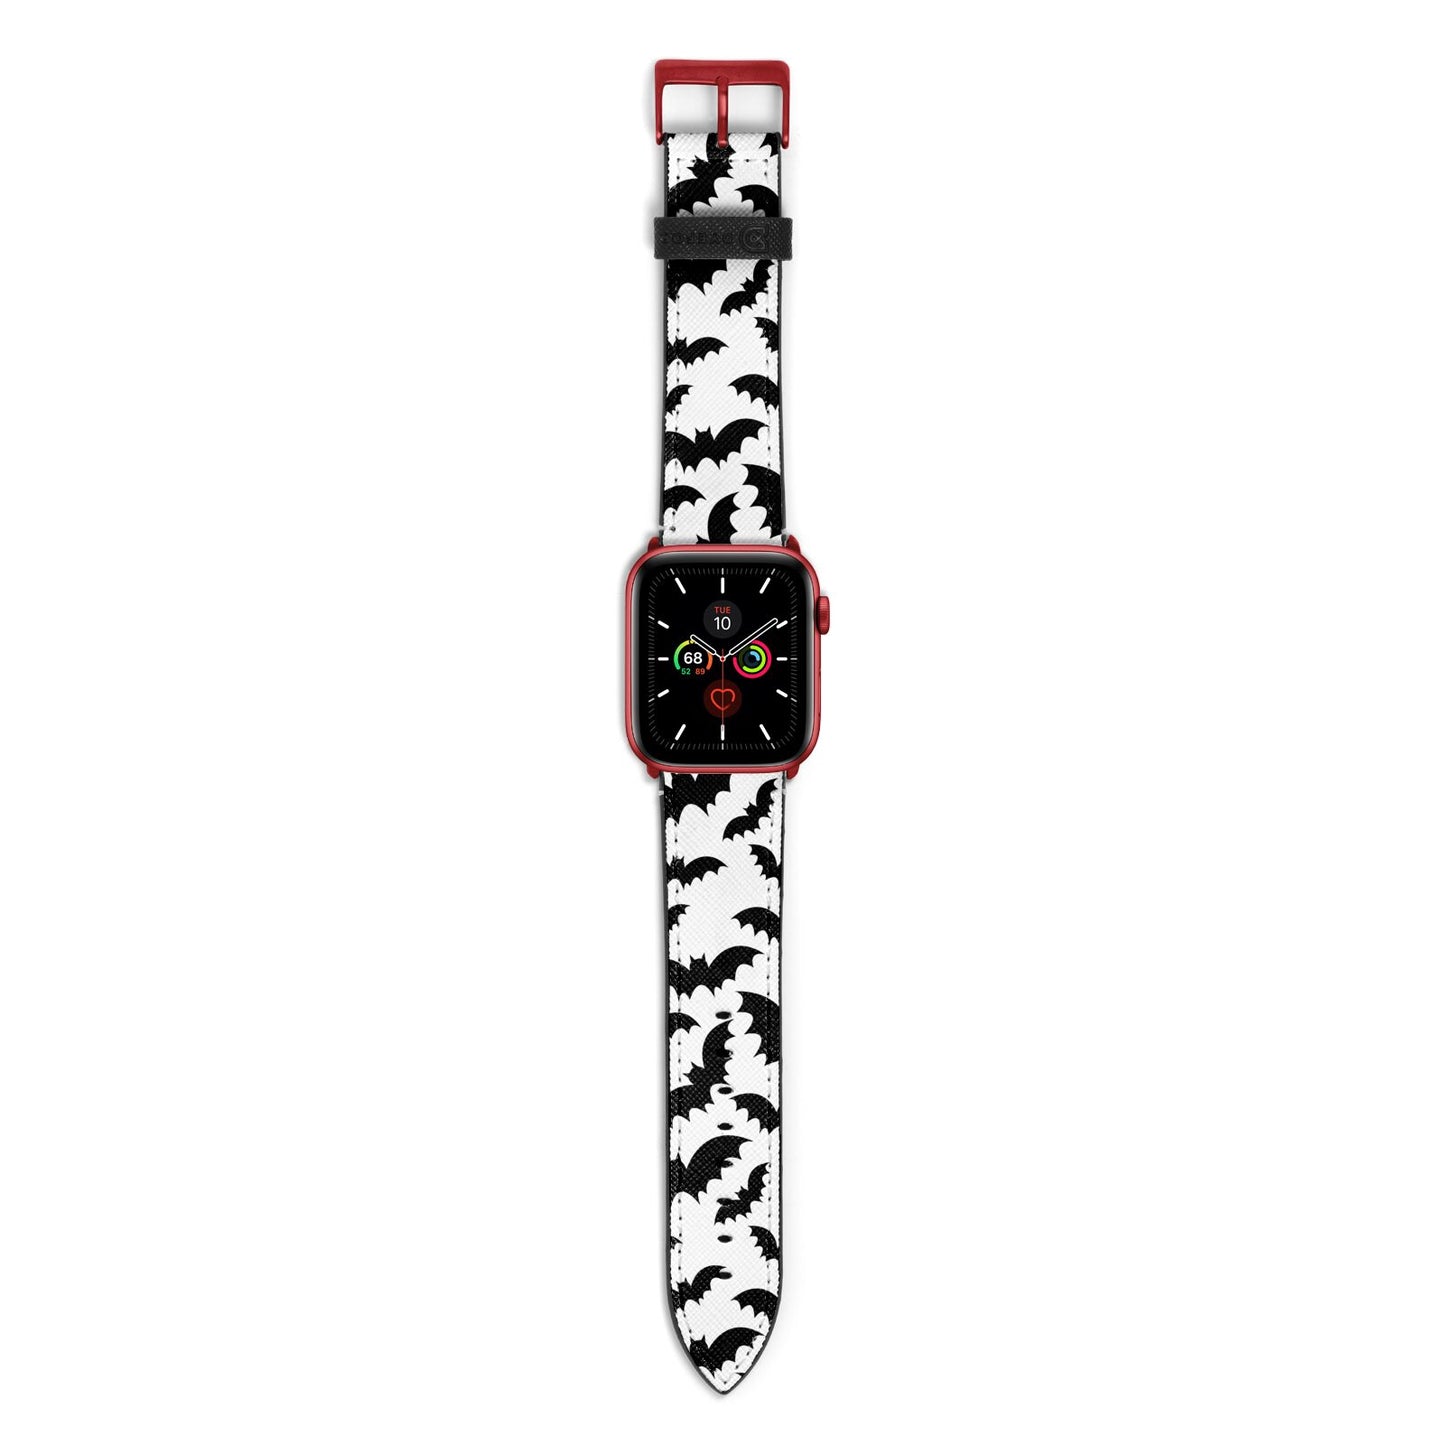 Bat Halloween Print Apple Watch Strap with Red Hardware